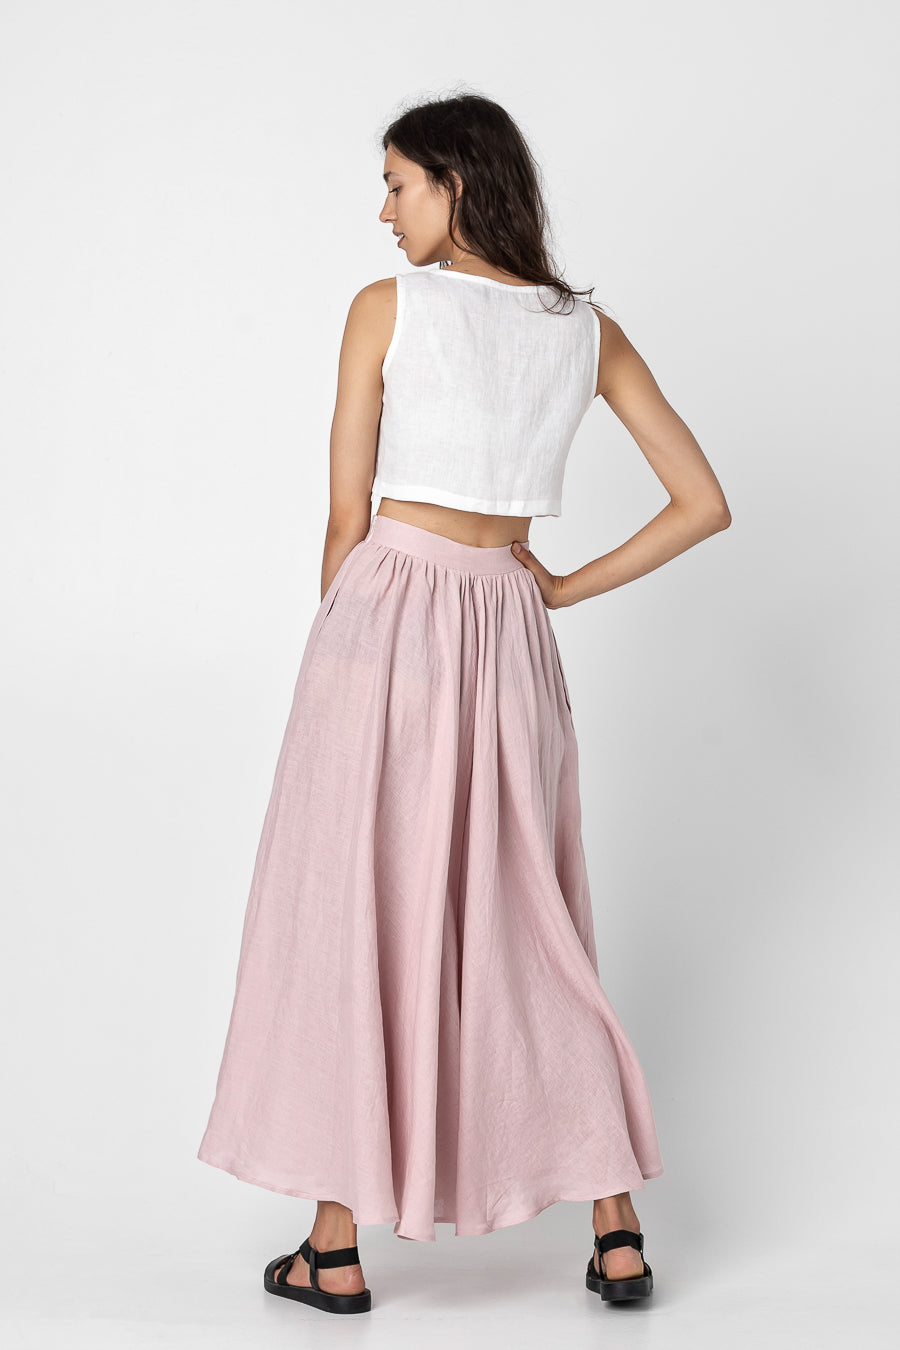 MONA | Linen skirt with pockets - Mezzoroni